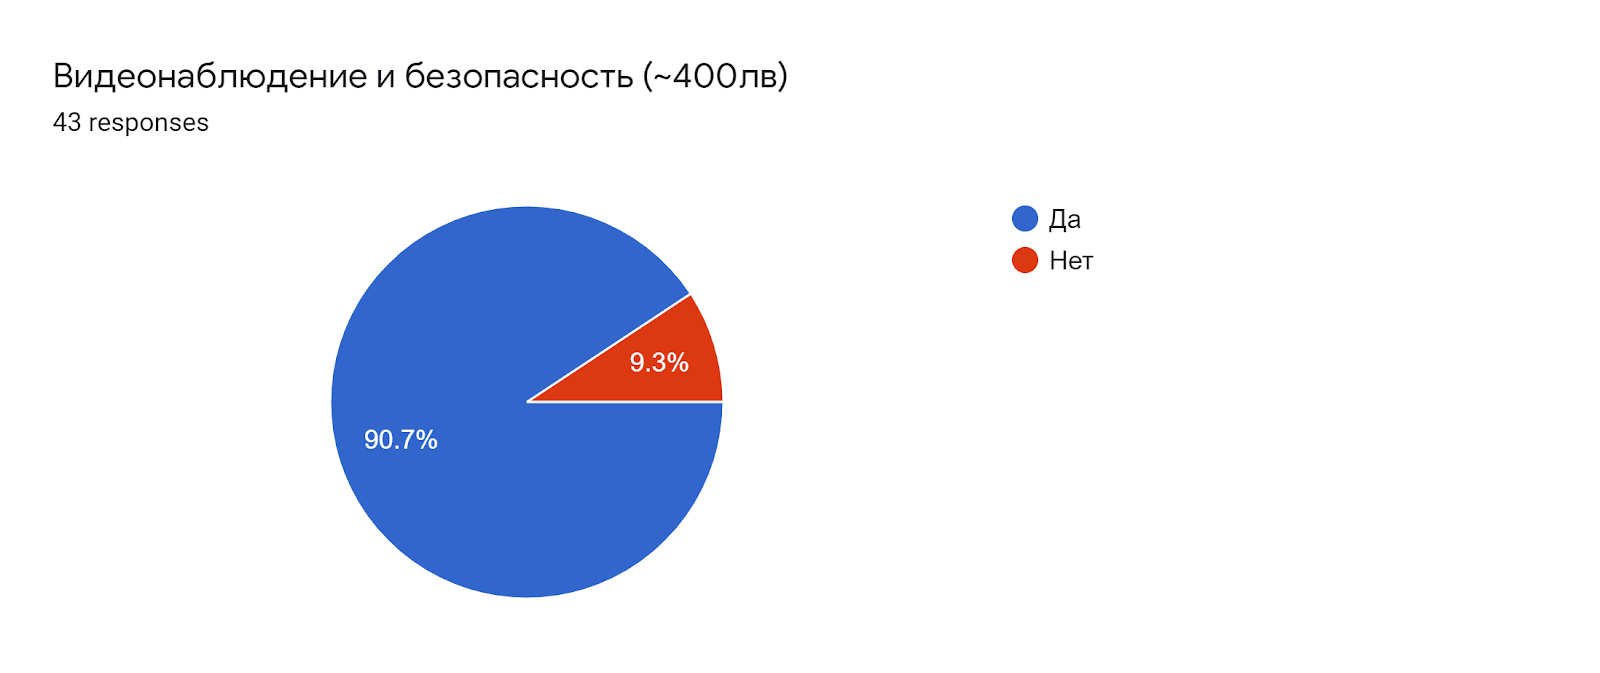 Forms response chart. Question title: Видеонаблюдение и безопасность (~400лв). Number of responses: 43 responses.